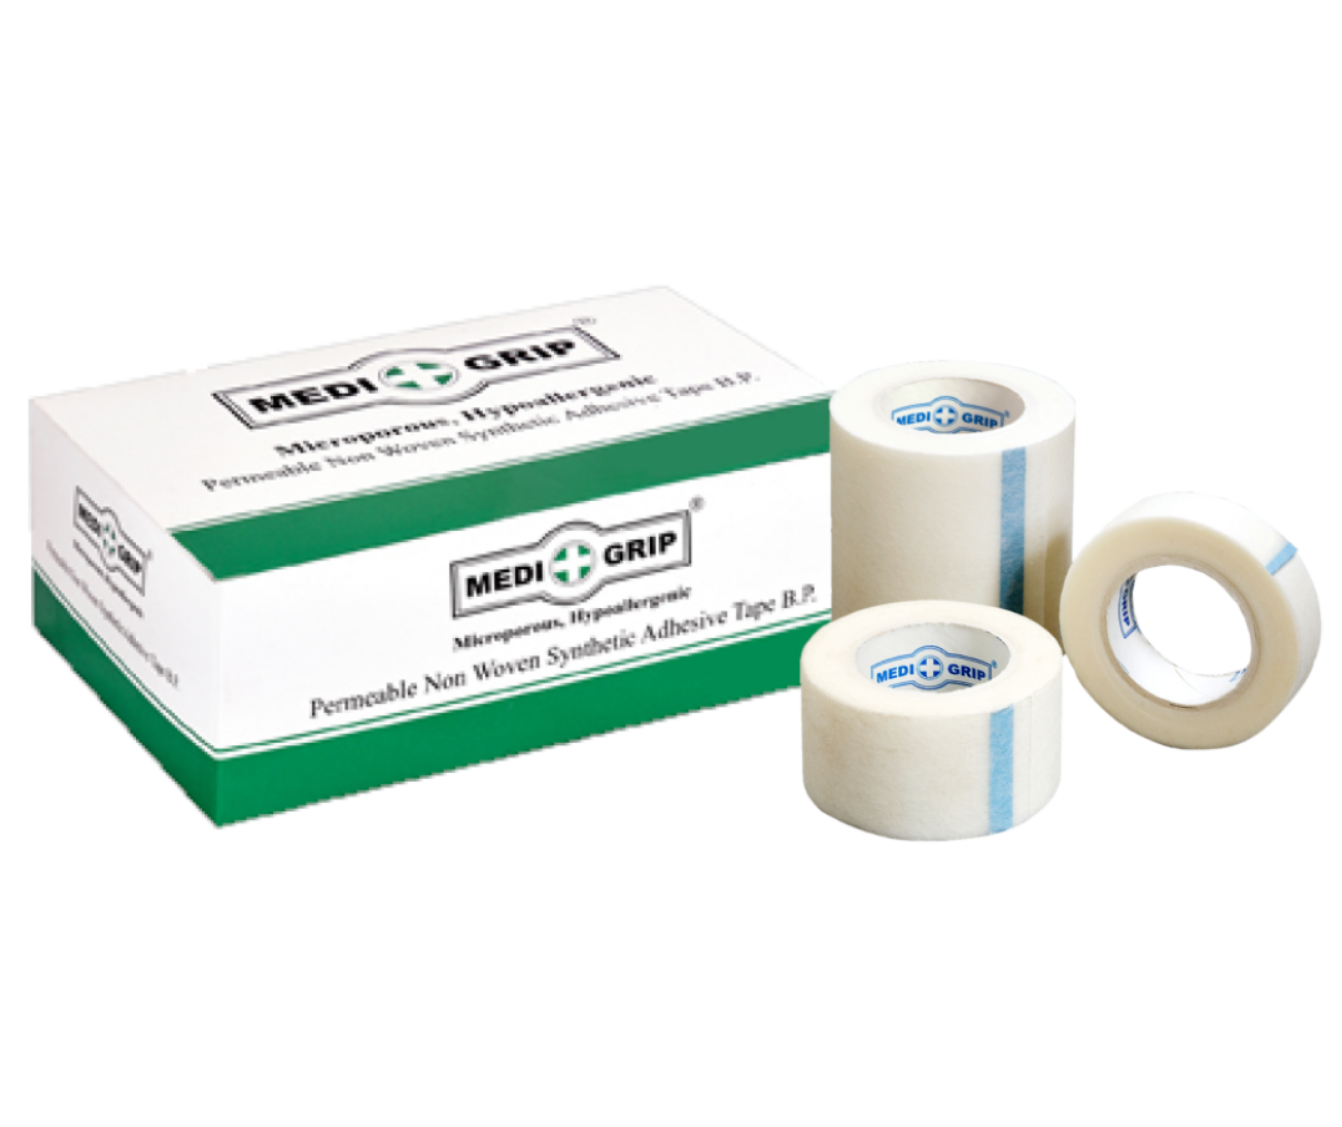 Medical Grade Adhesive Patches: 24-box